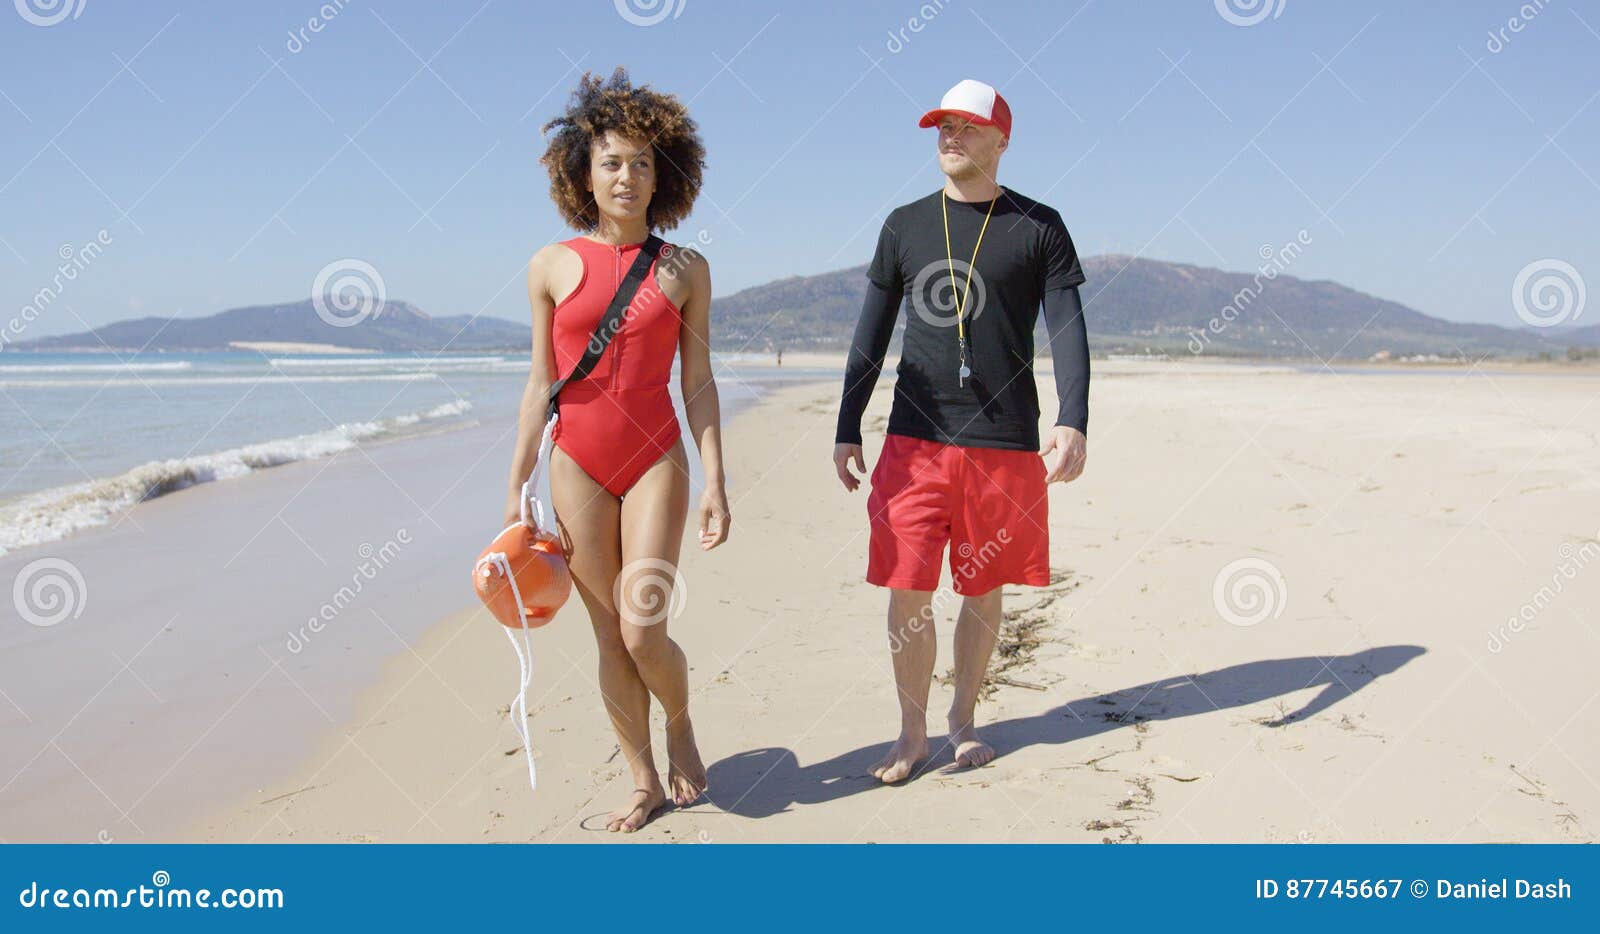 Female And Male Lifeguards Walking Along Beach Stock Image Image Of Shoreline Coast 87745667 